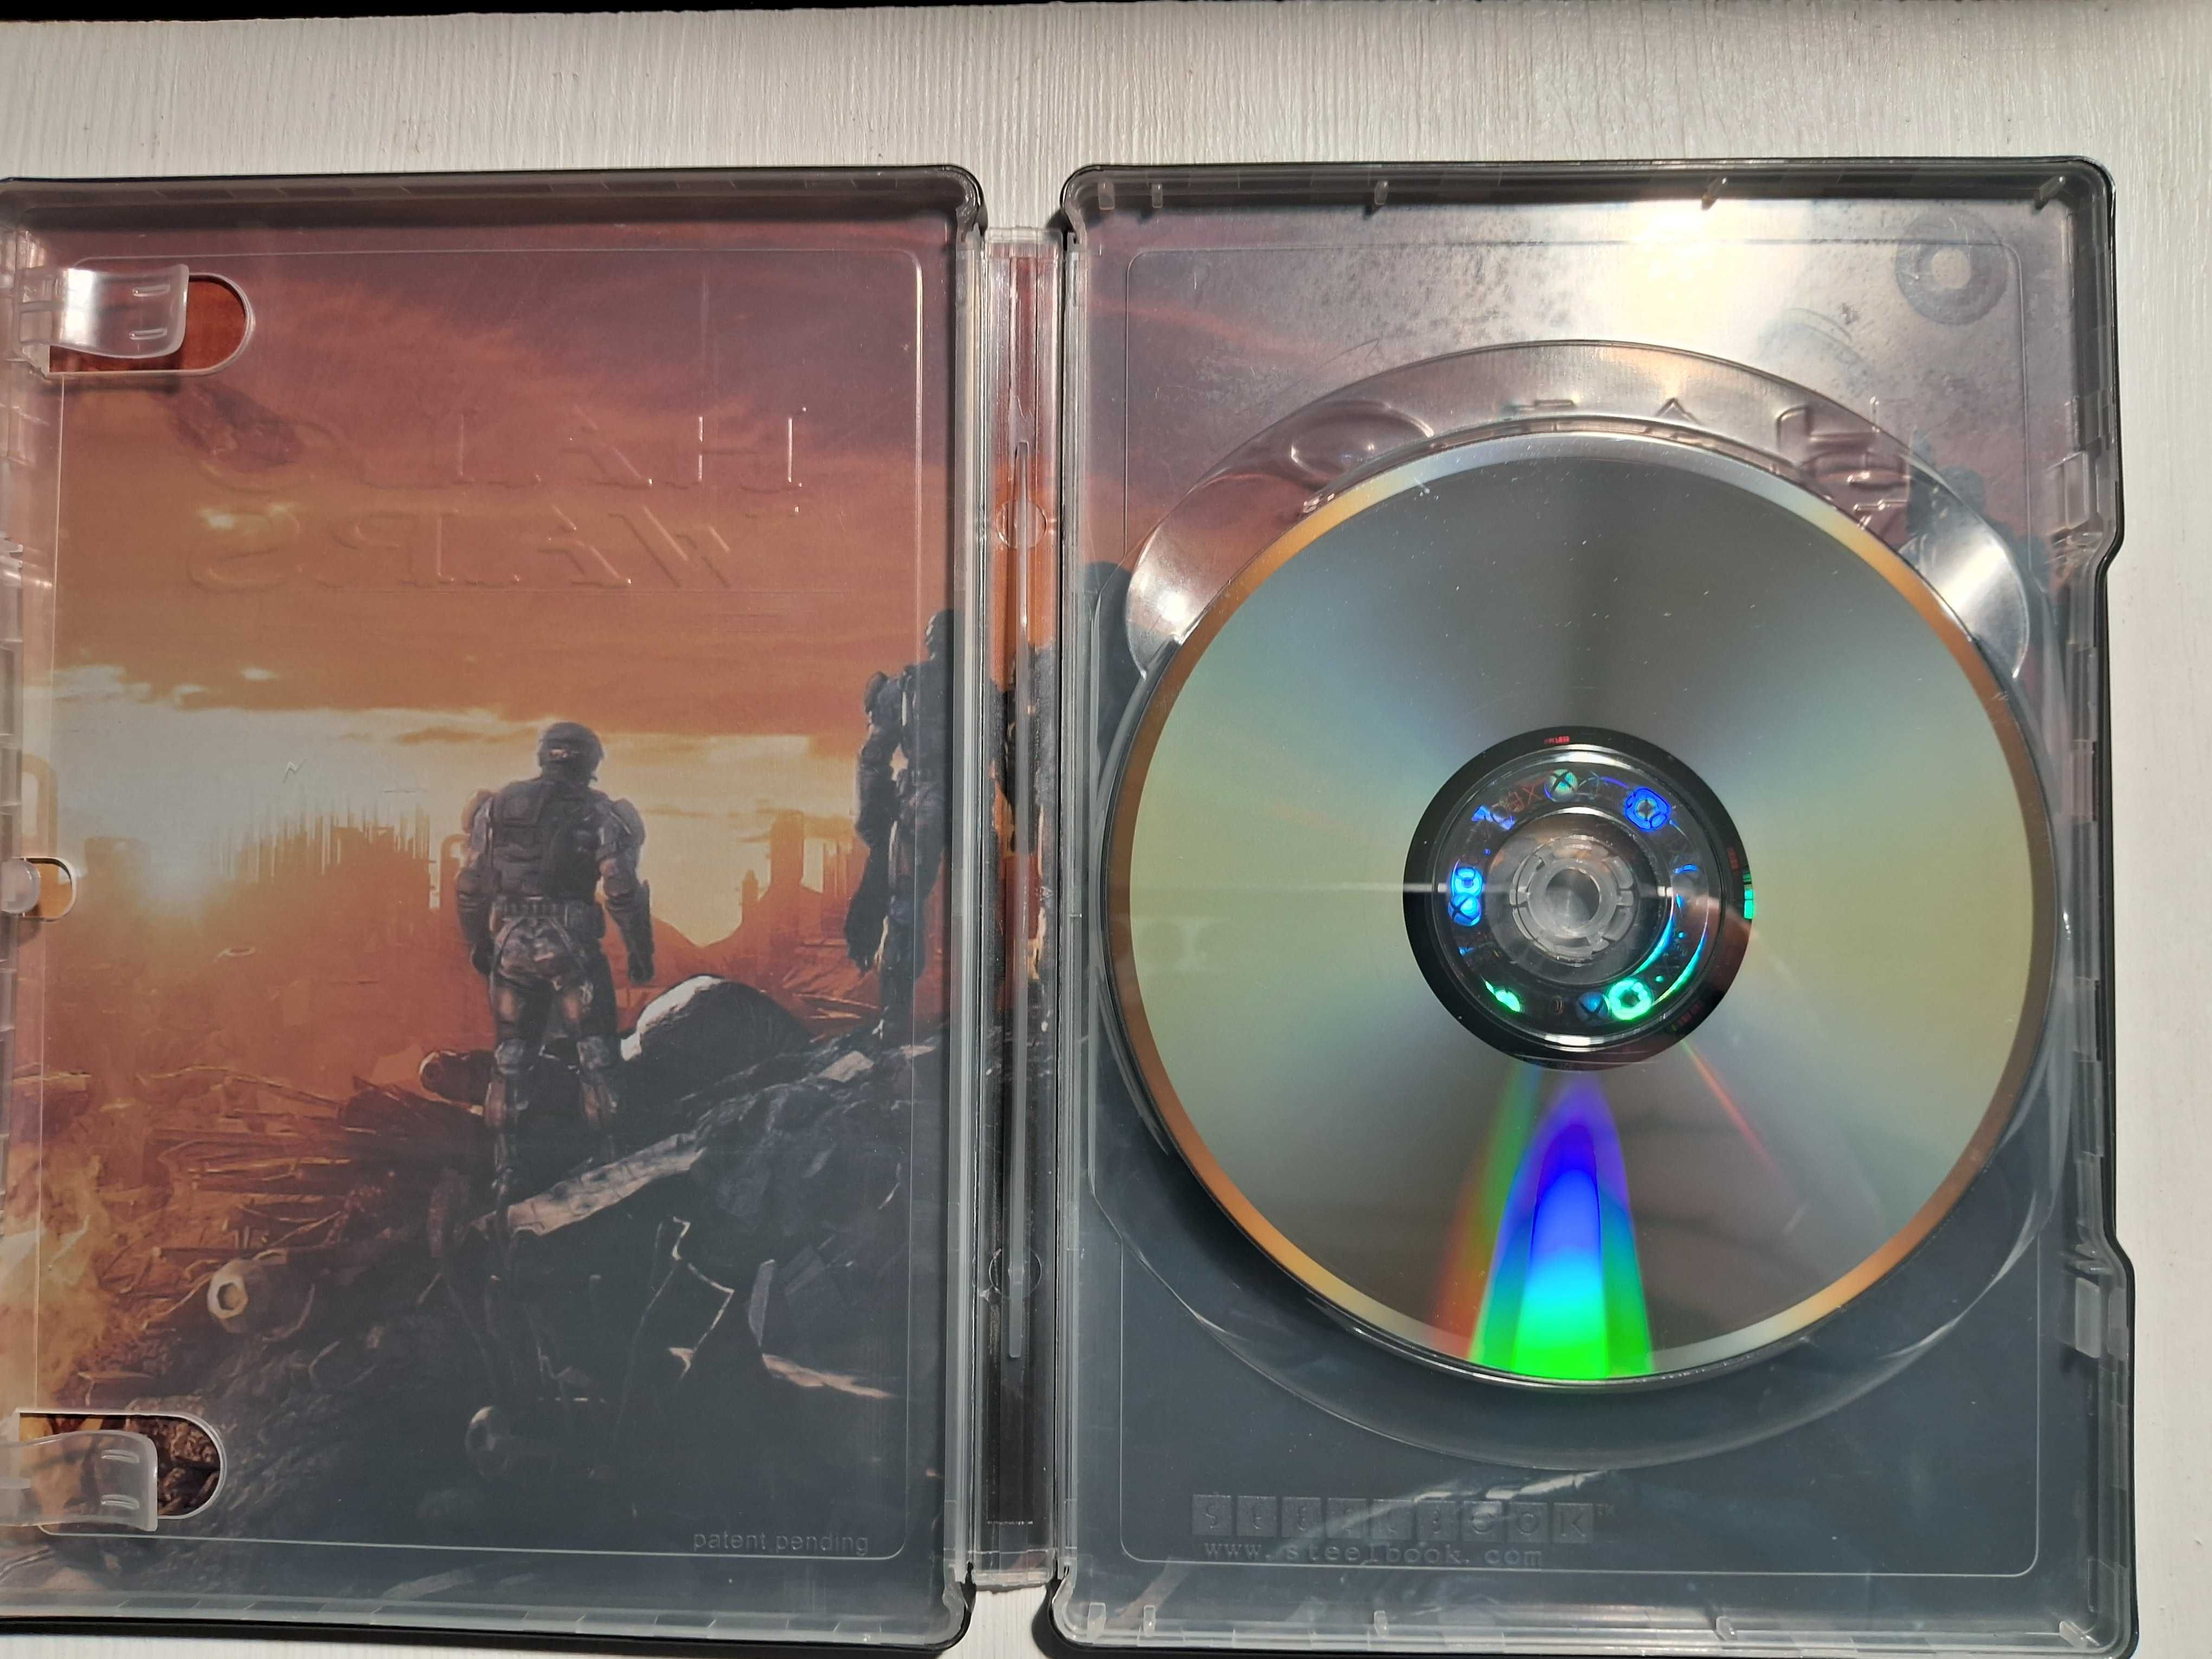 игра Halo Wars limited edition